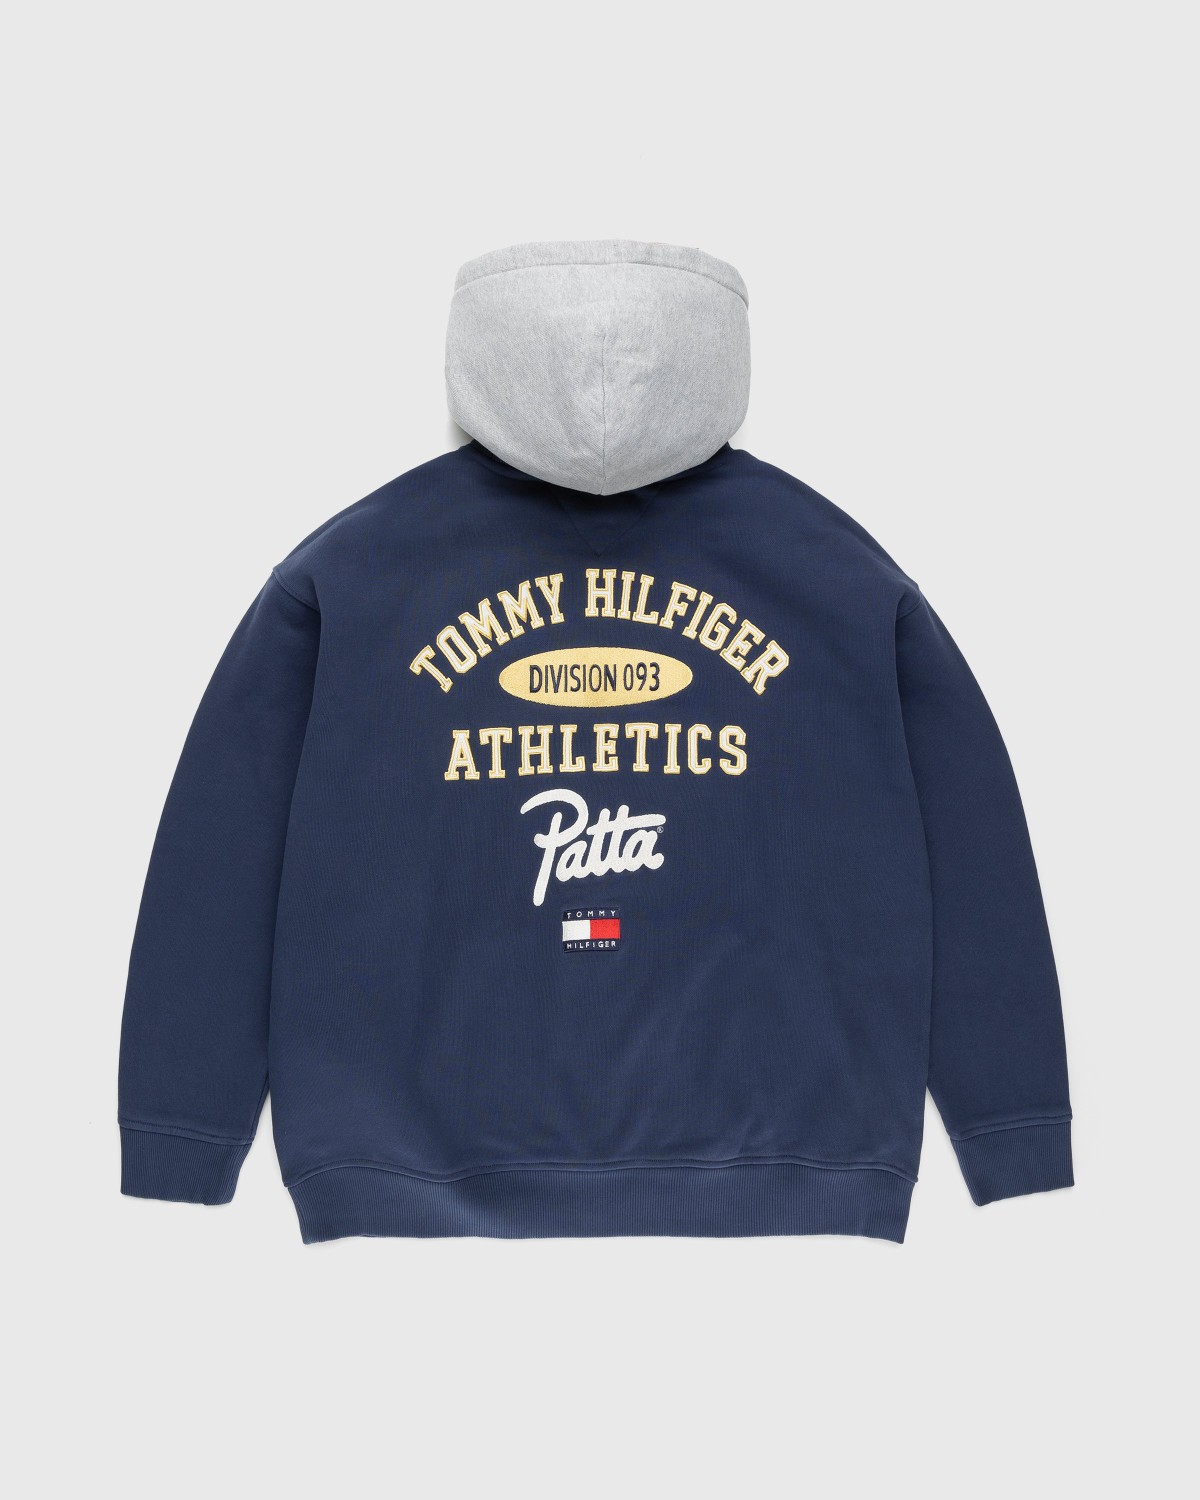 Patta x Tommy Hilfiger – Hoodie Sport Navy | Highsnobiety Shop